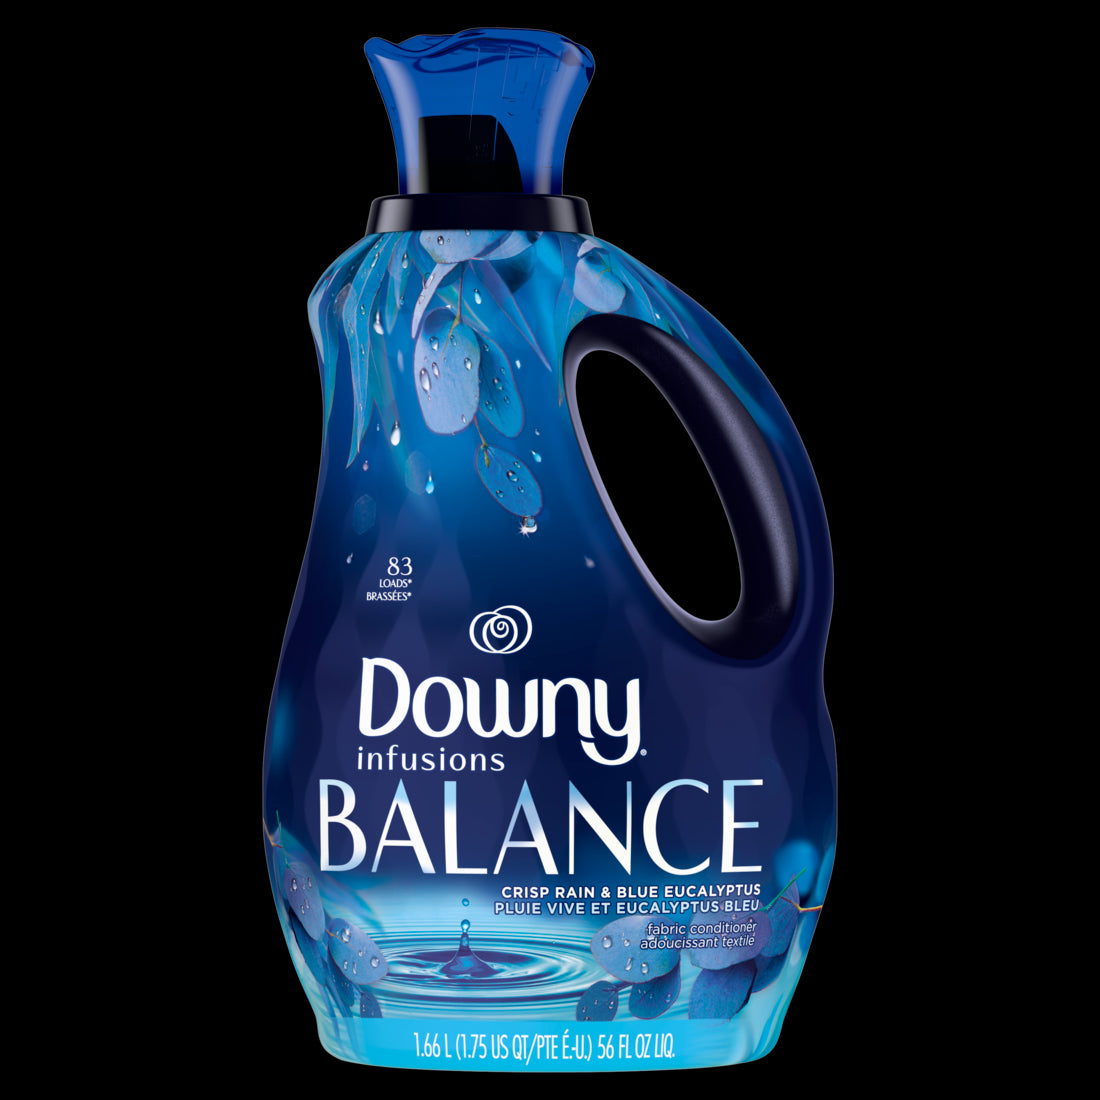 Downy BALANCE Infusions Laundry Fabric Softener Liquid Crisp Rain and Blue Eucalyptus - 56oz/4pk